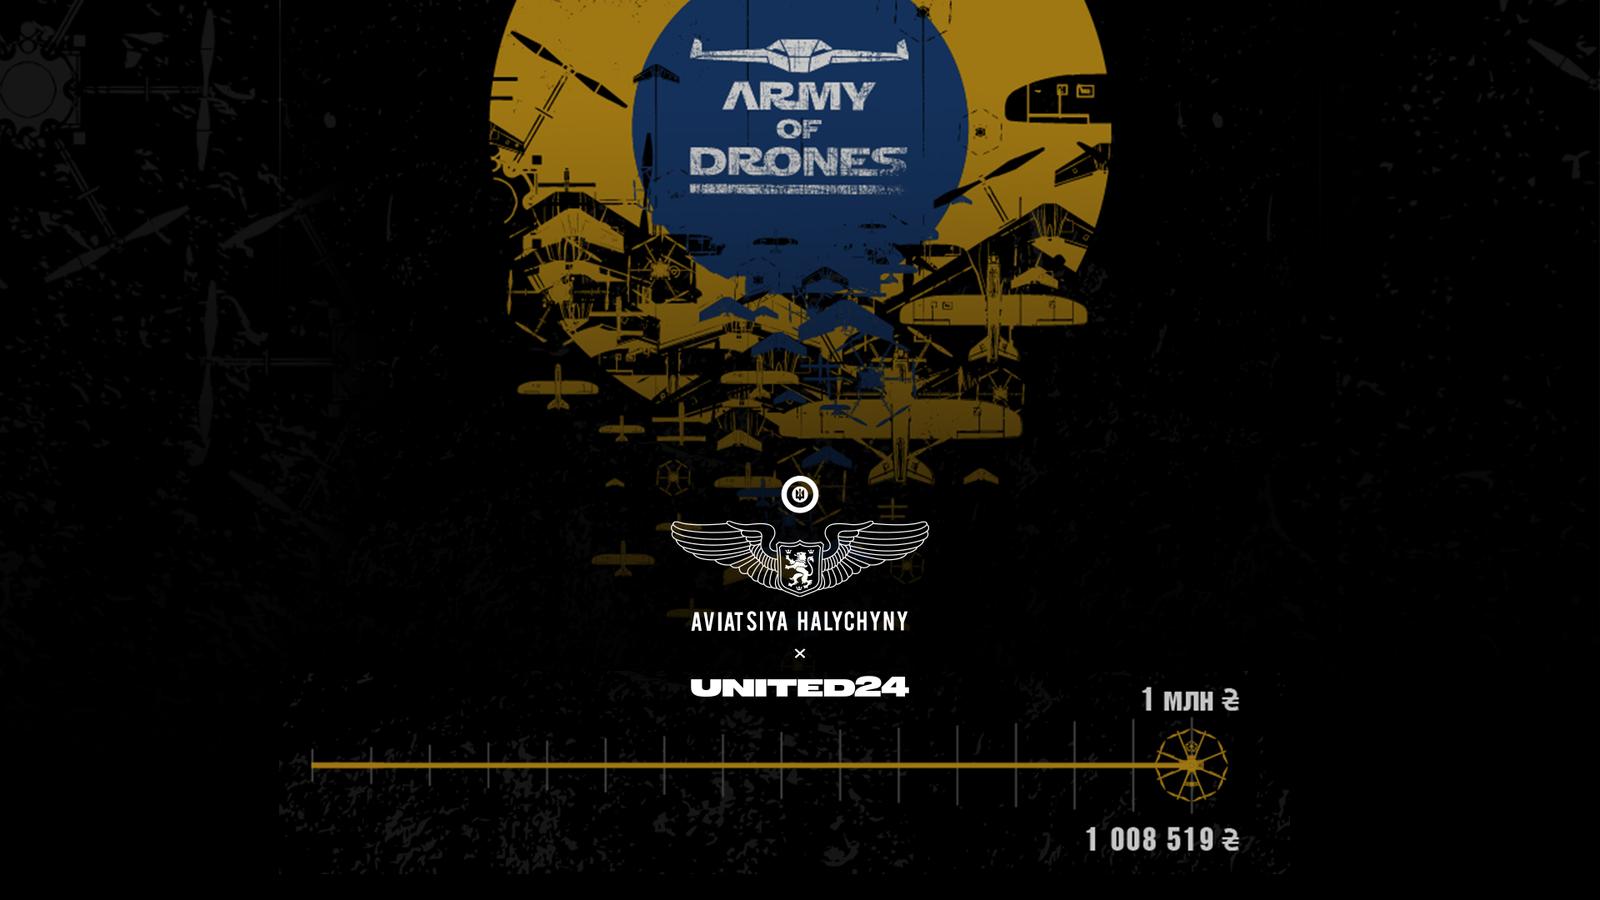 Aviatsiya Halychyny raised 1,008,519 UAH for an attack drone